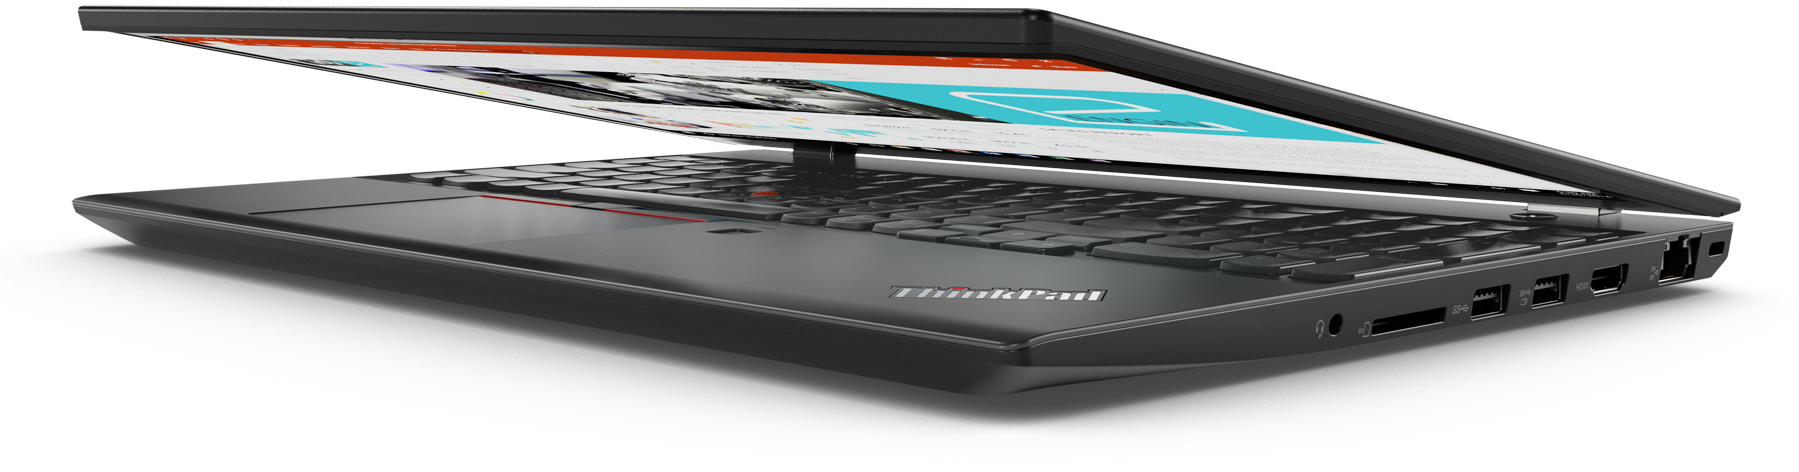 Lenovo's ThinkPad T580 Launched: Quad-Core CPU, 4K LCD, 32 GB RAM